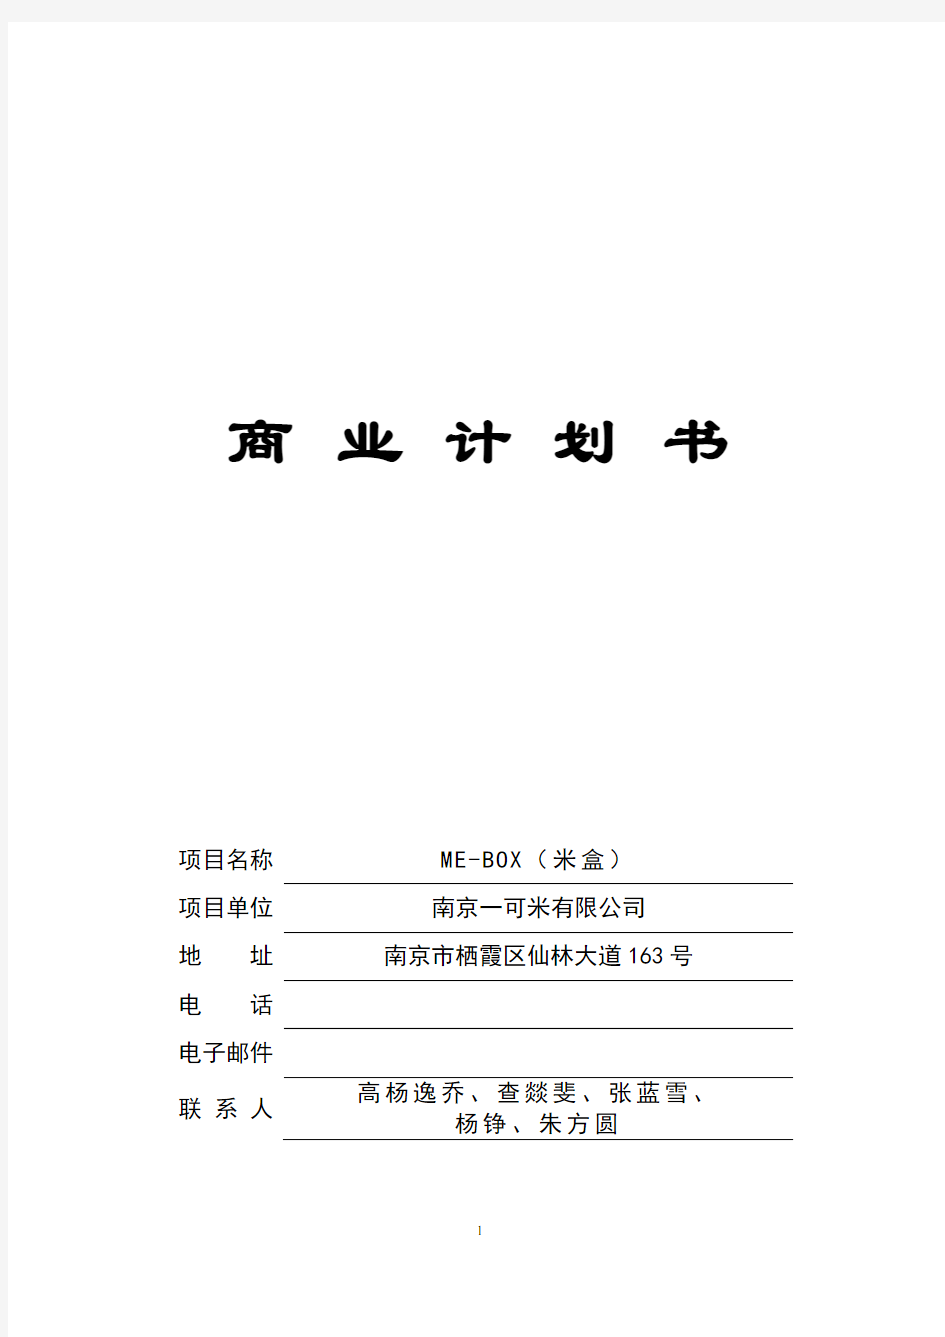 ME-BOX商业计划书 南京大学 高杨逸乔、查燚斐、张蓝雪、杨铮、朱方圆